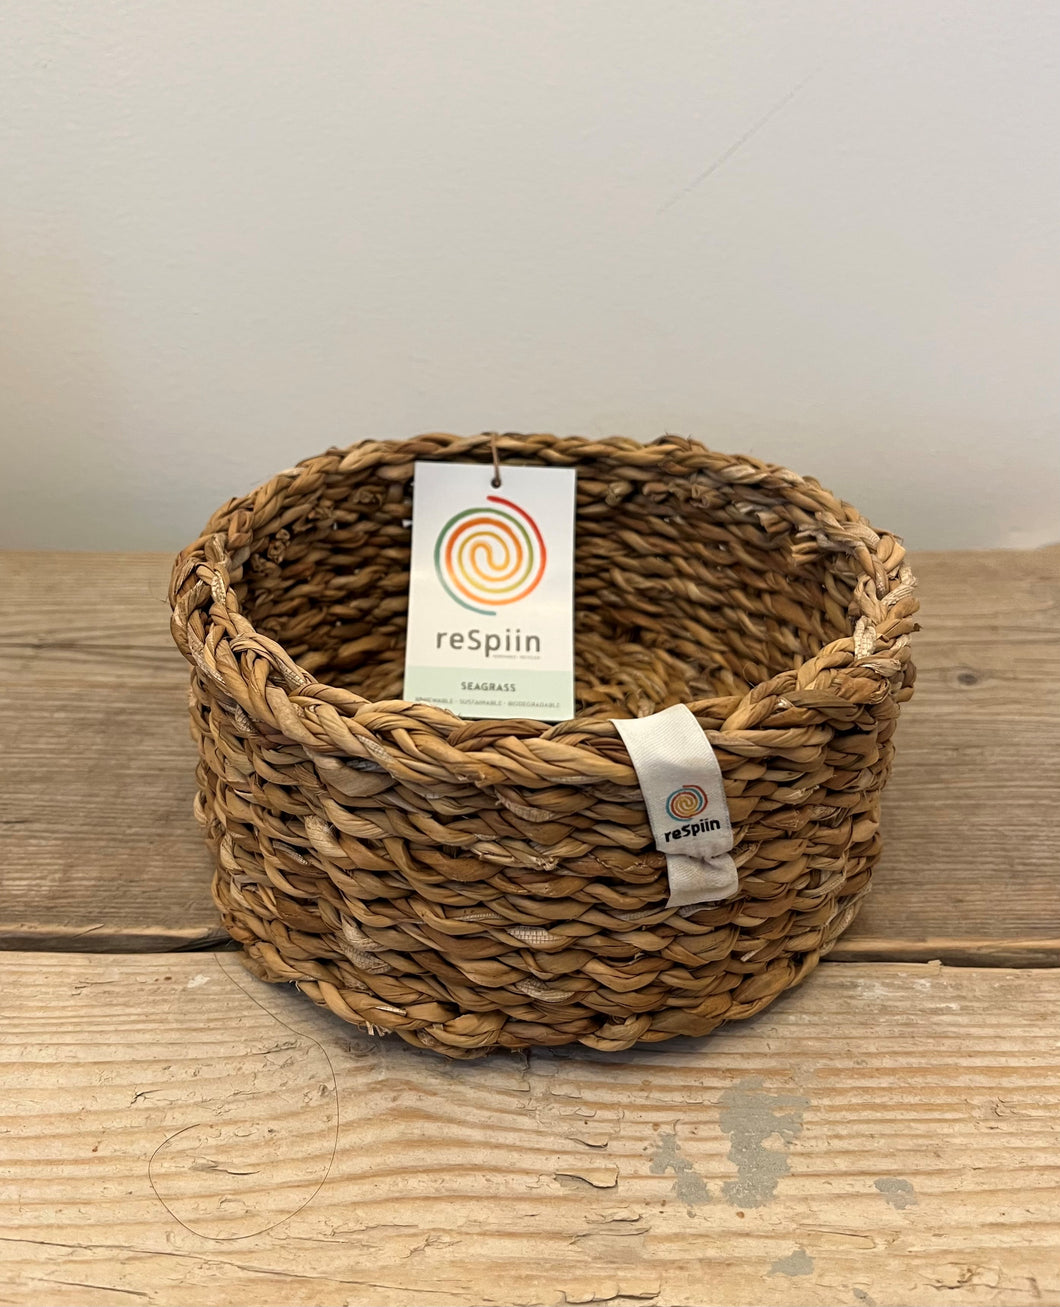 reSpiin - seagrass basket